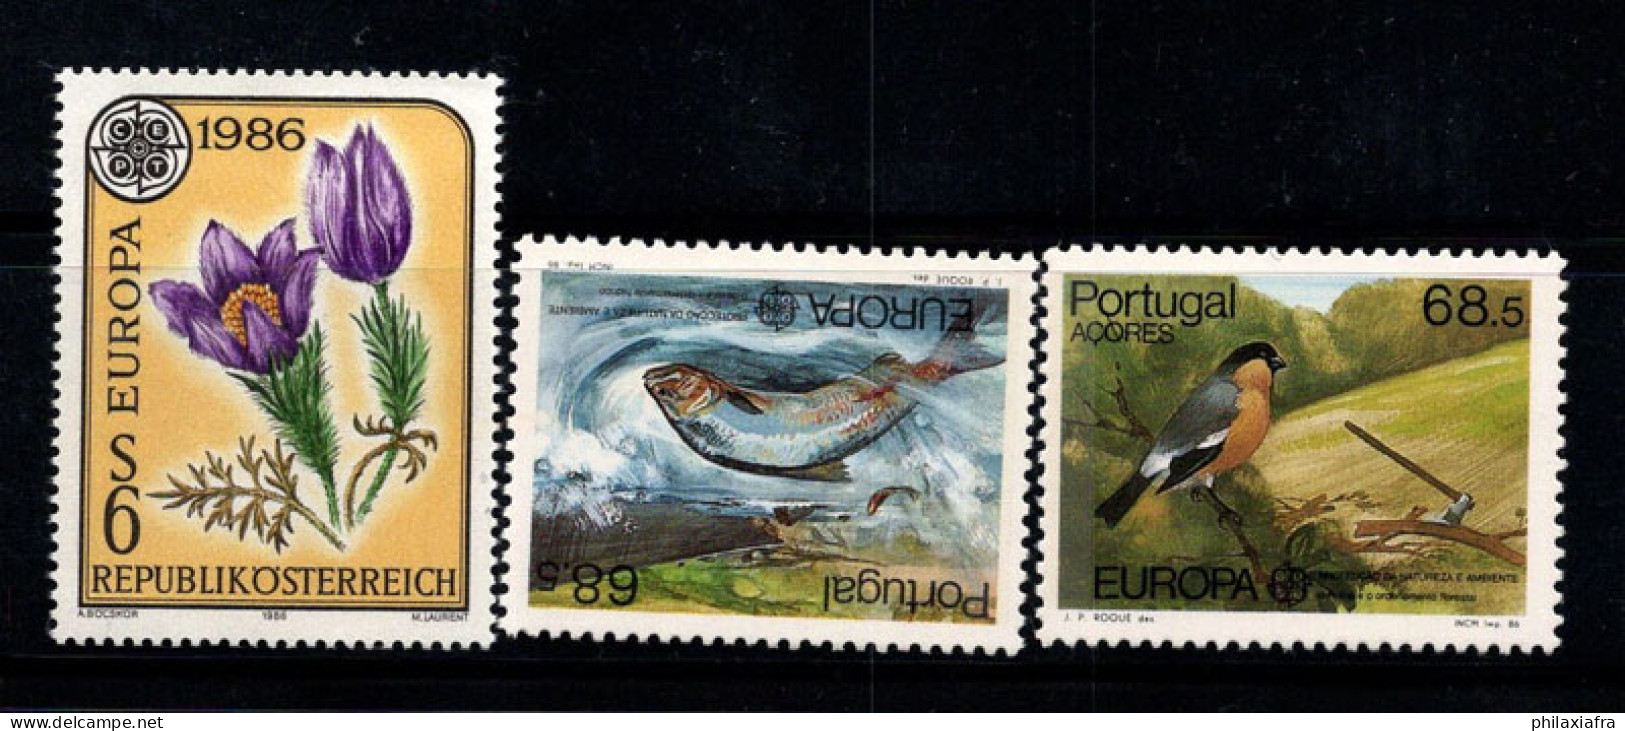 Europe 1986 Neuf ** 100% CEPT, Autriche, Portugal, Açores - 1986